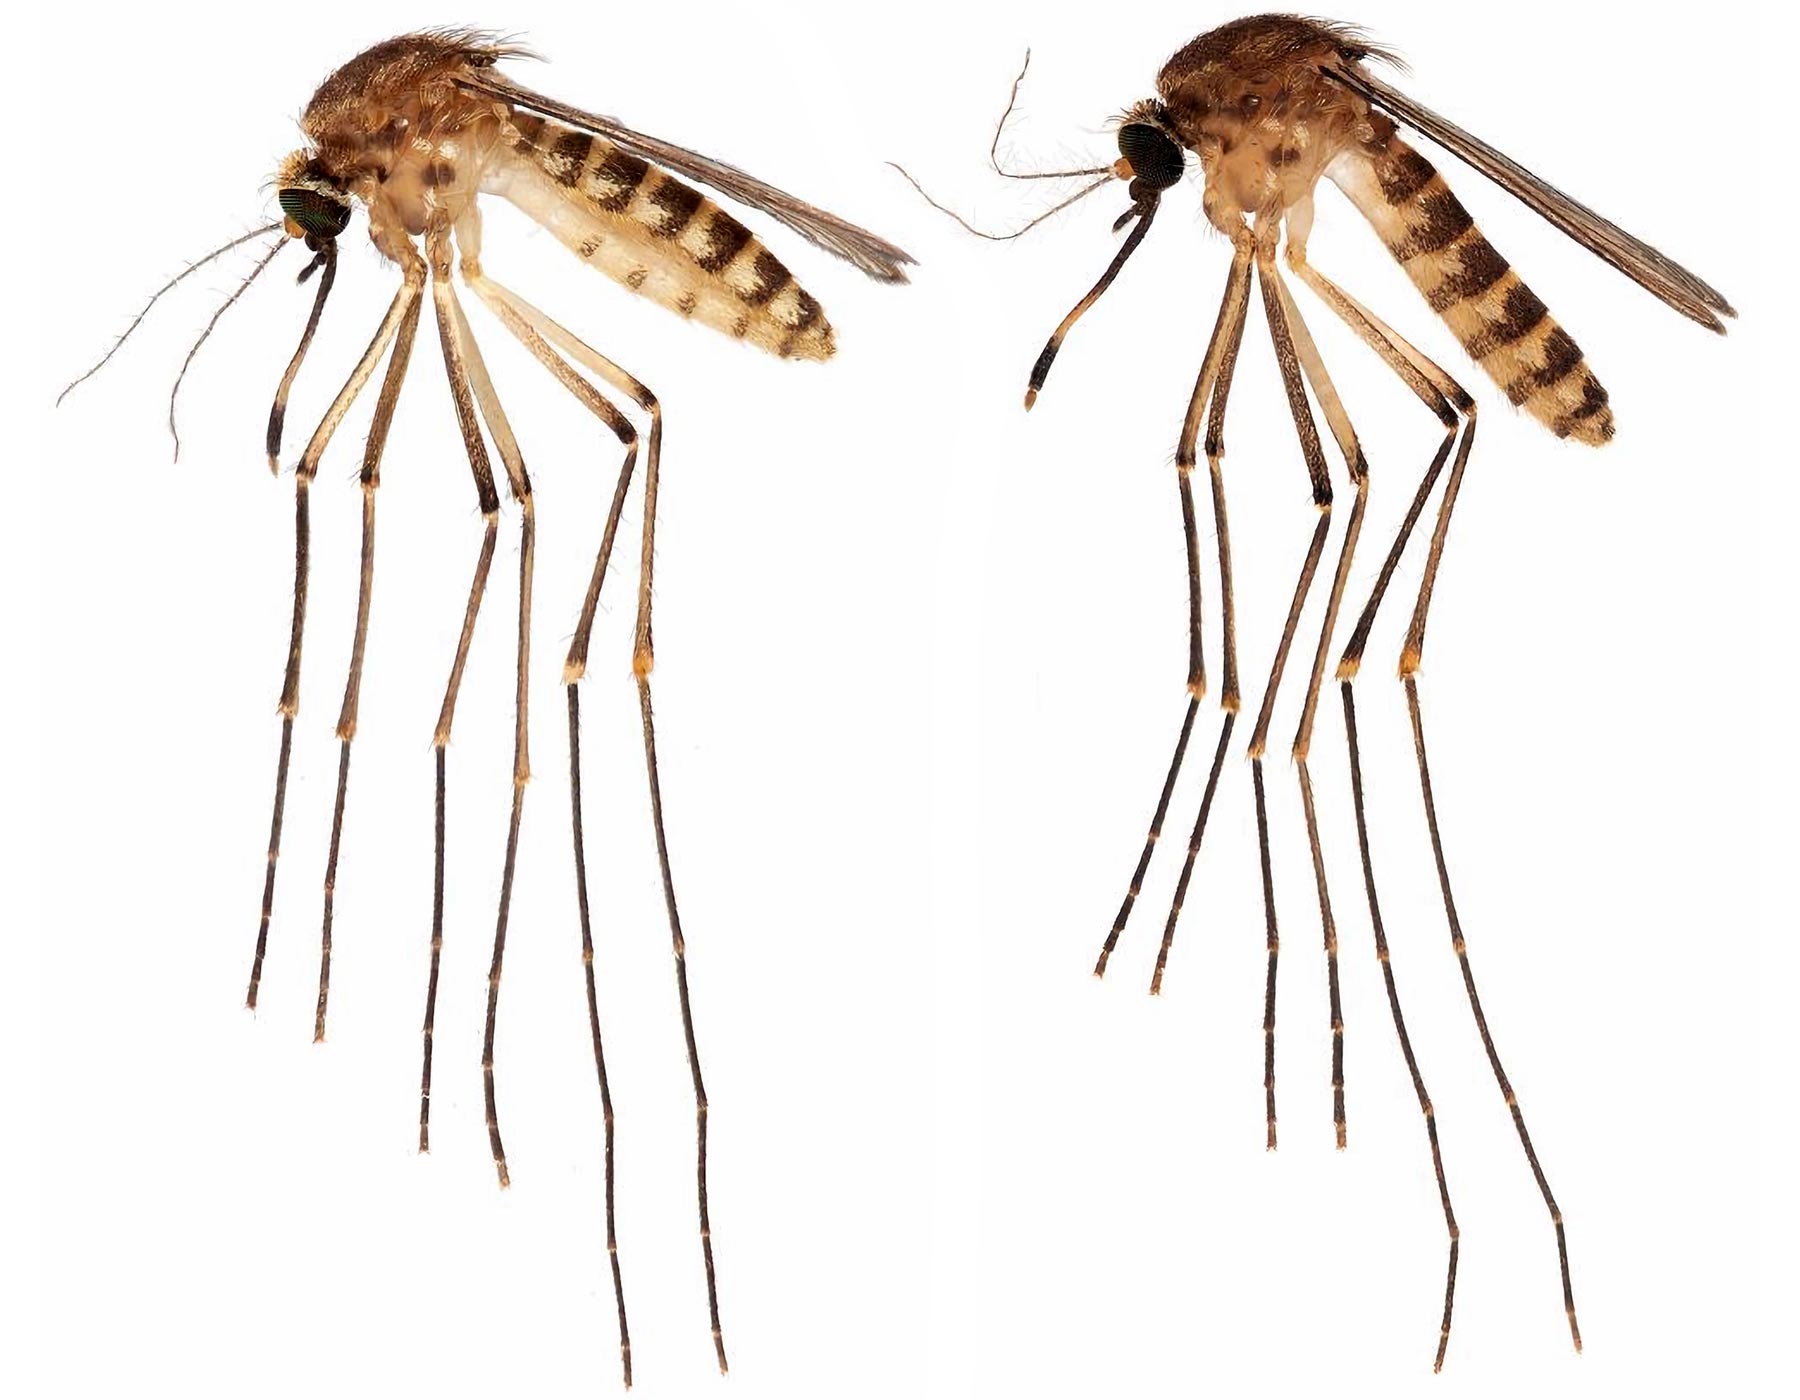 Saya menyampaikan kekhawatiran penyakit tentang spesies nyamuk baru yang dilaporkan di Florida